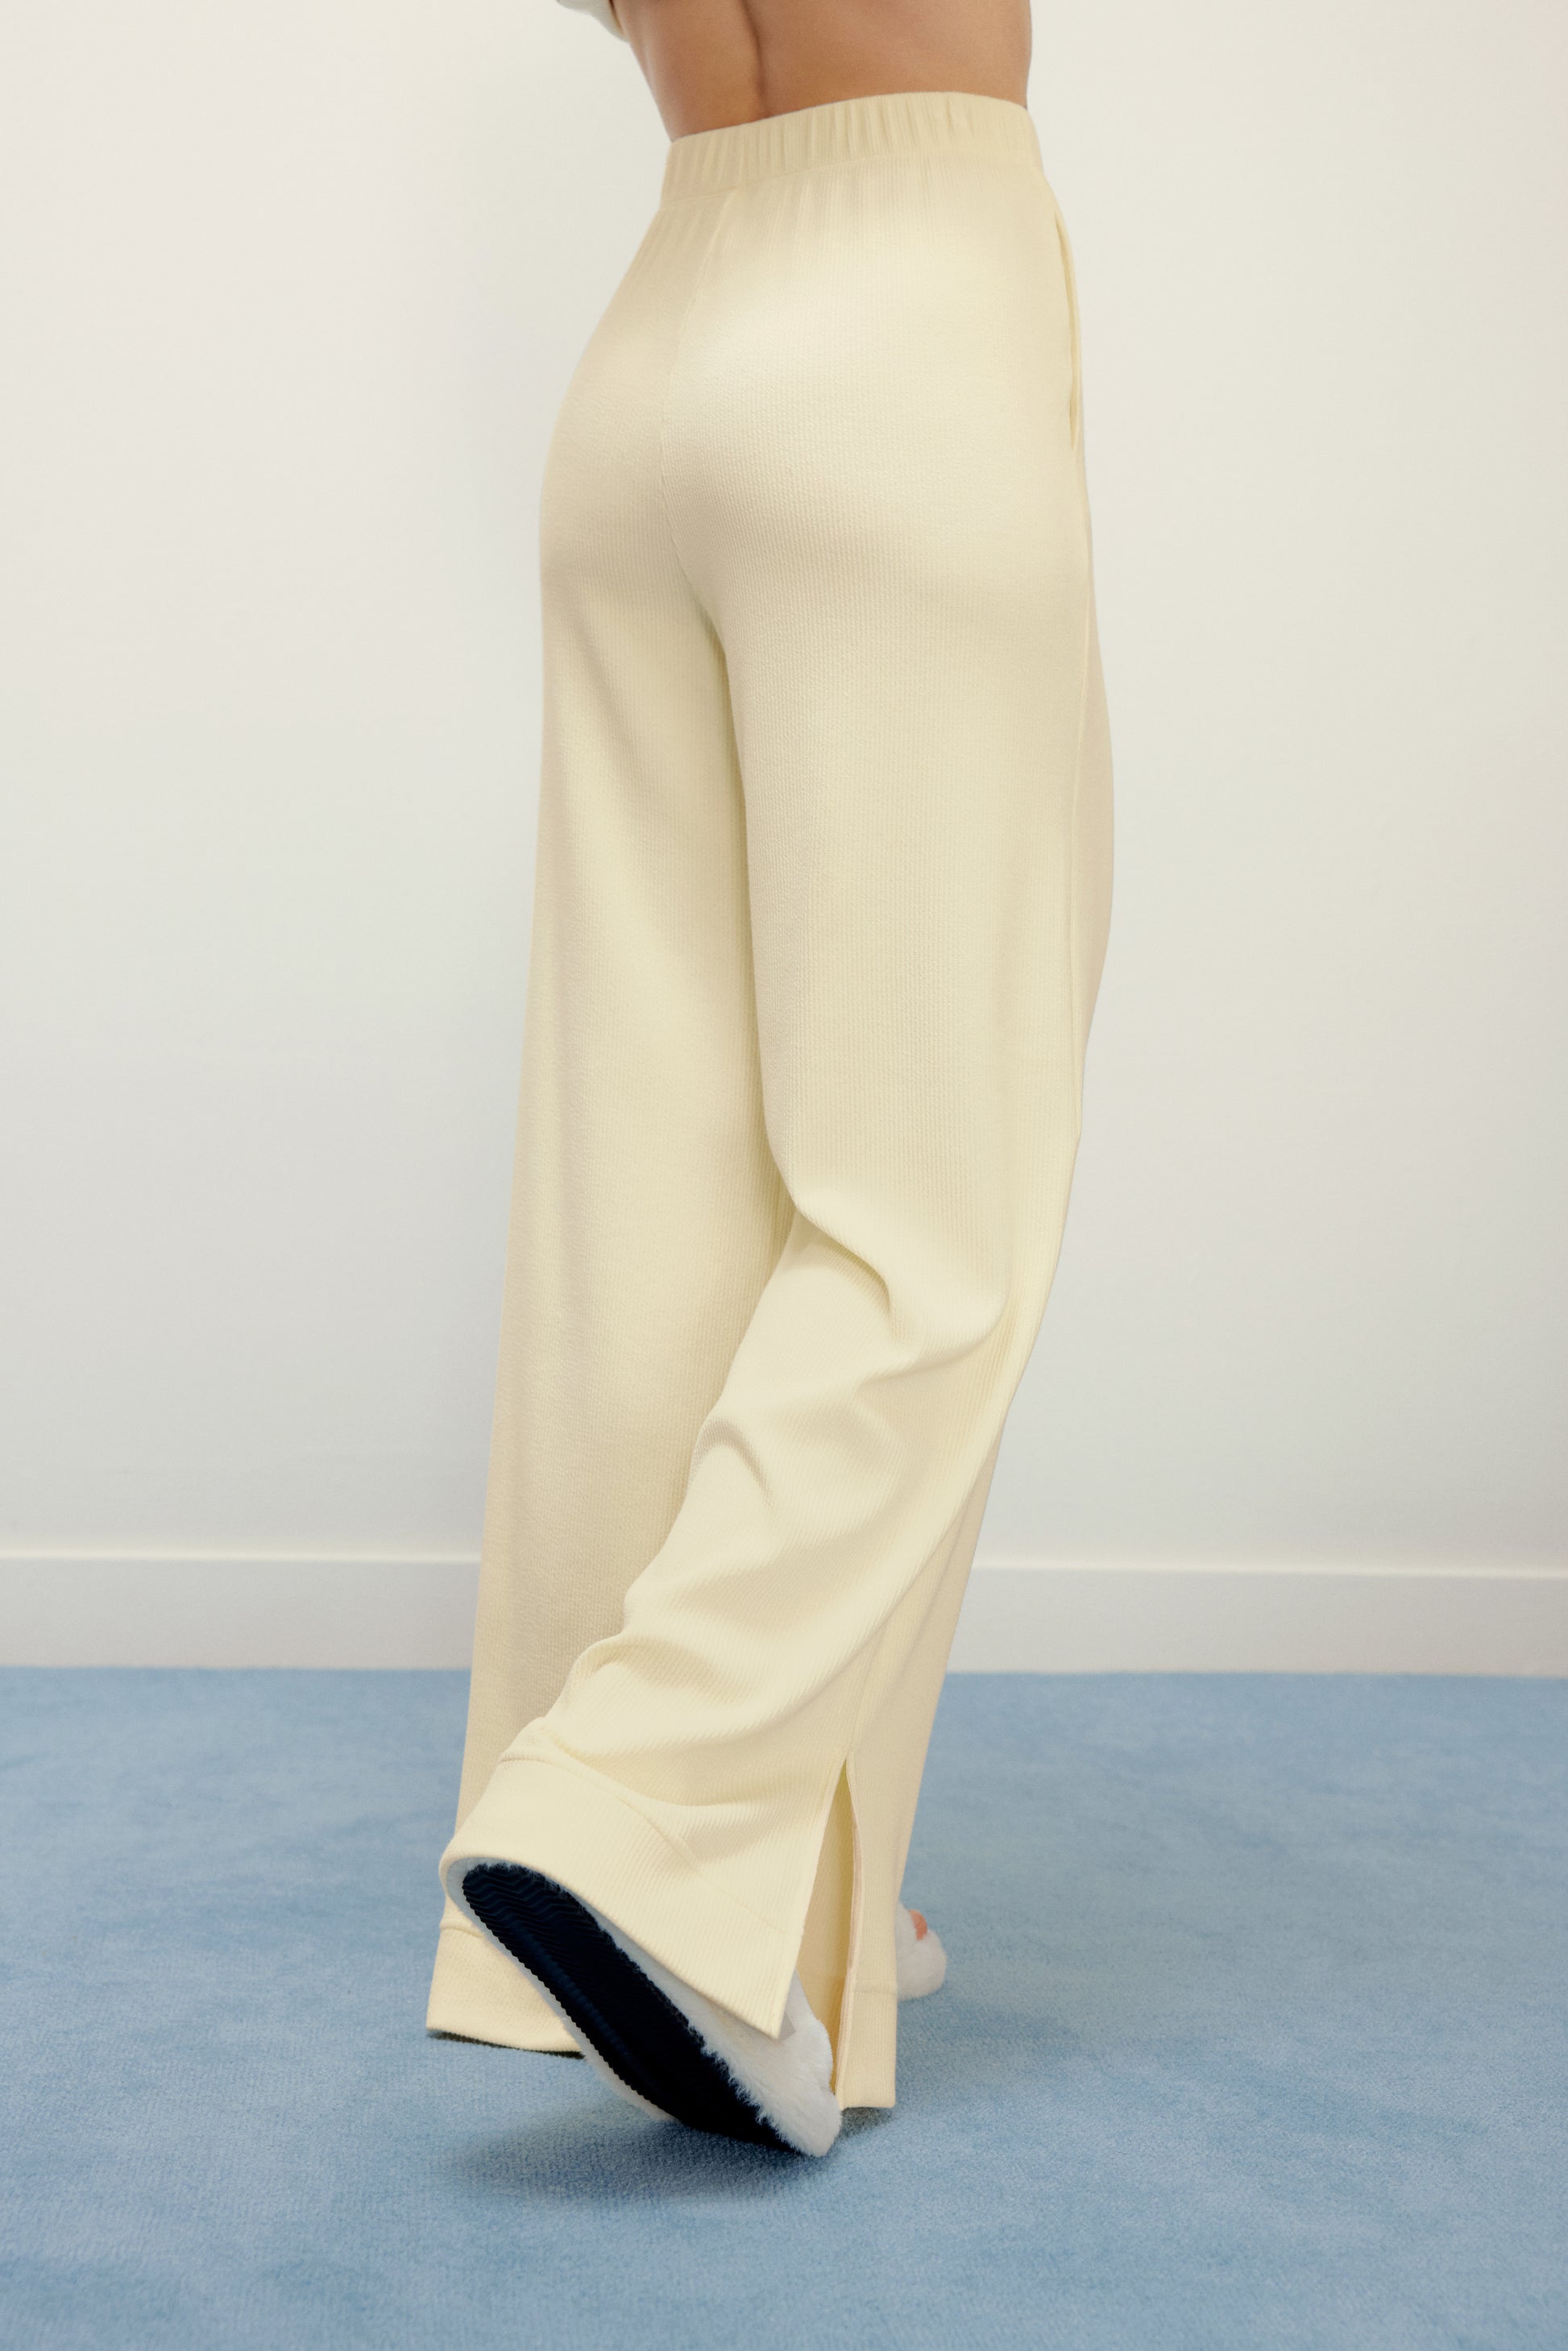 Cheap Leggings women fitness pants S-XL pure color high waist trousers  pocket elastic workout push up pants